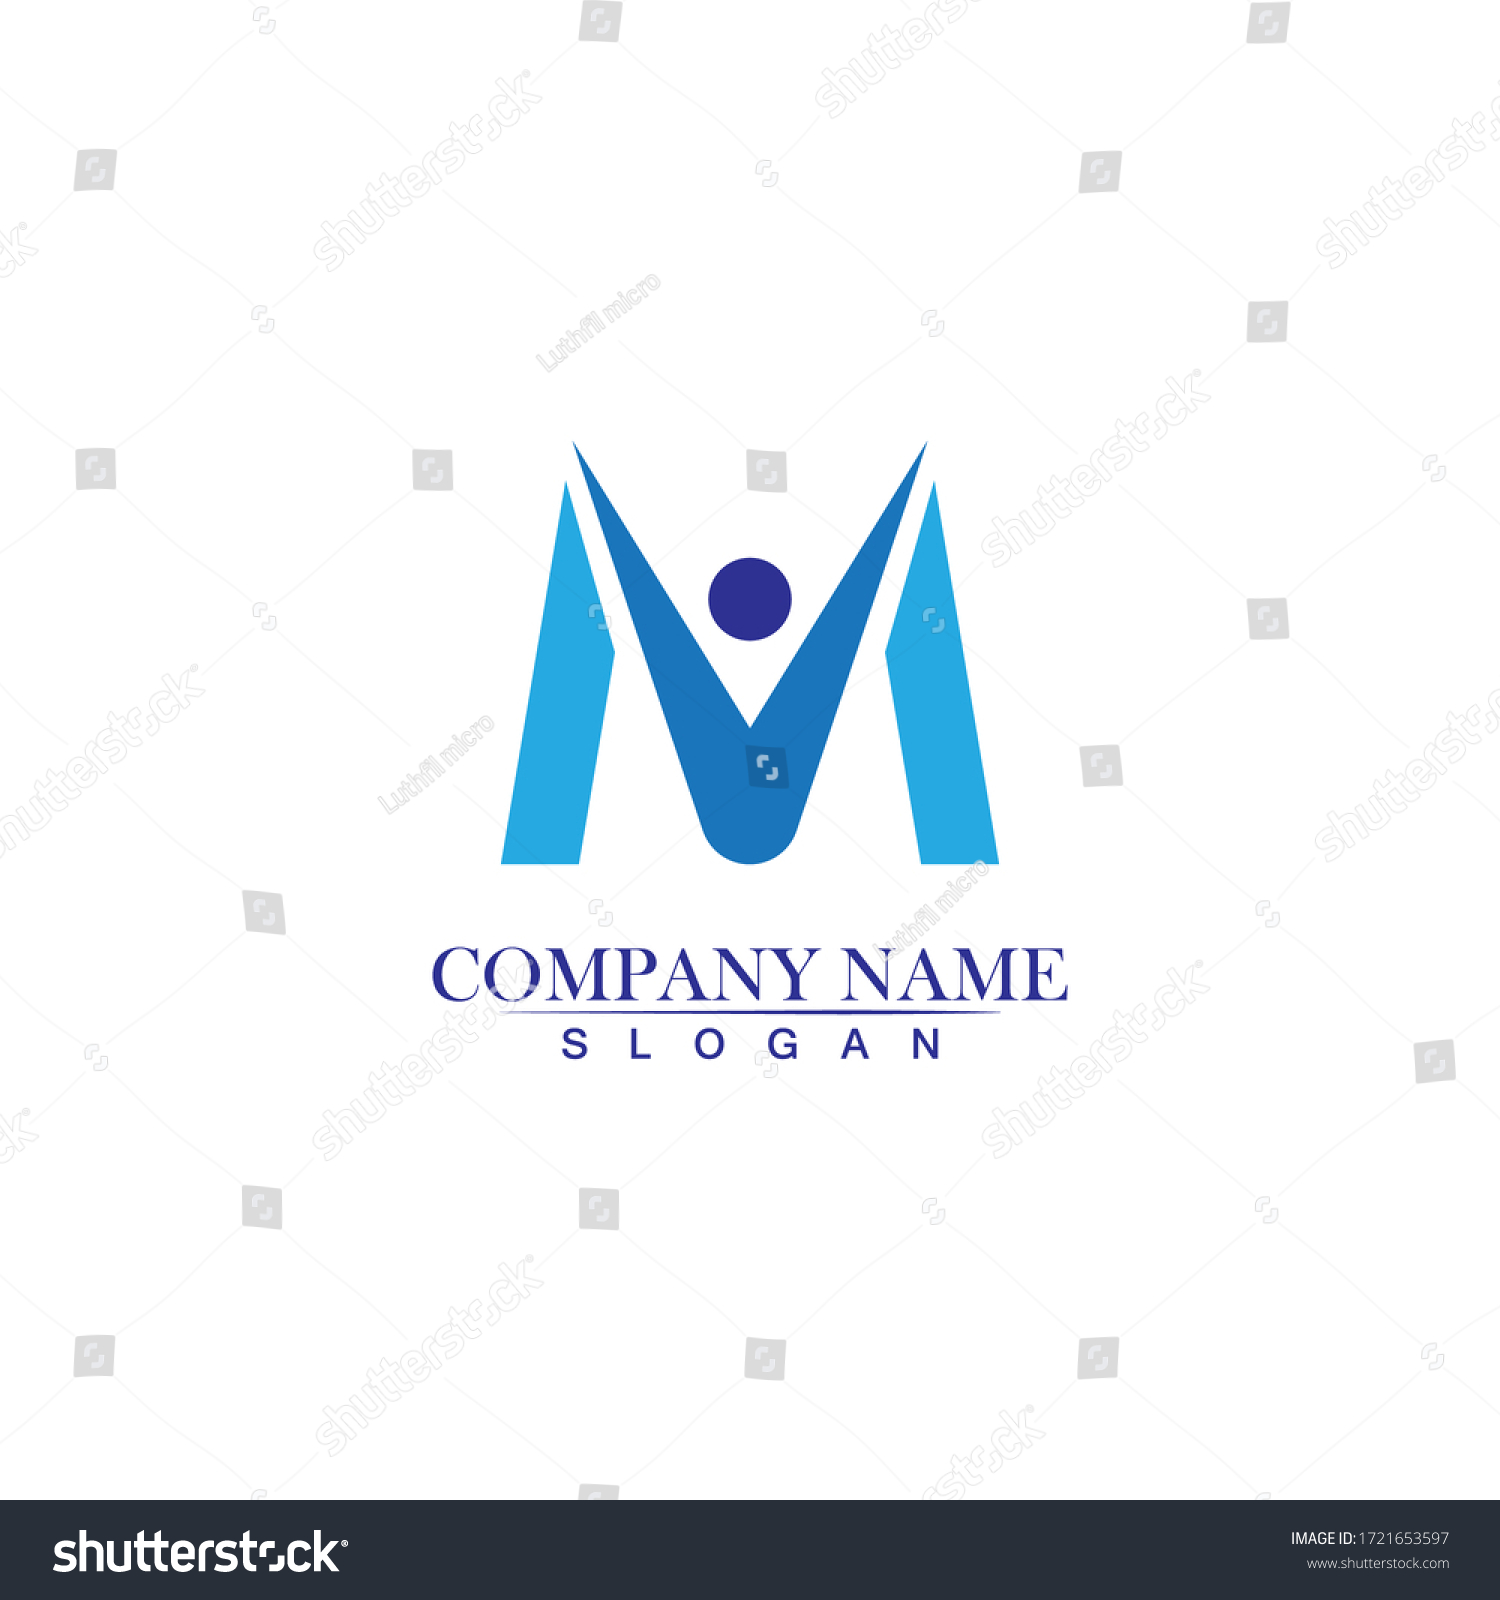 M people logo symbol template #1721653597